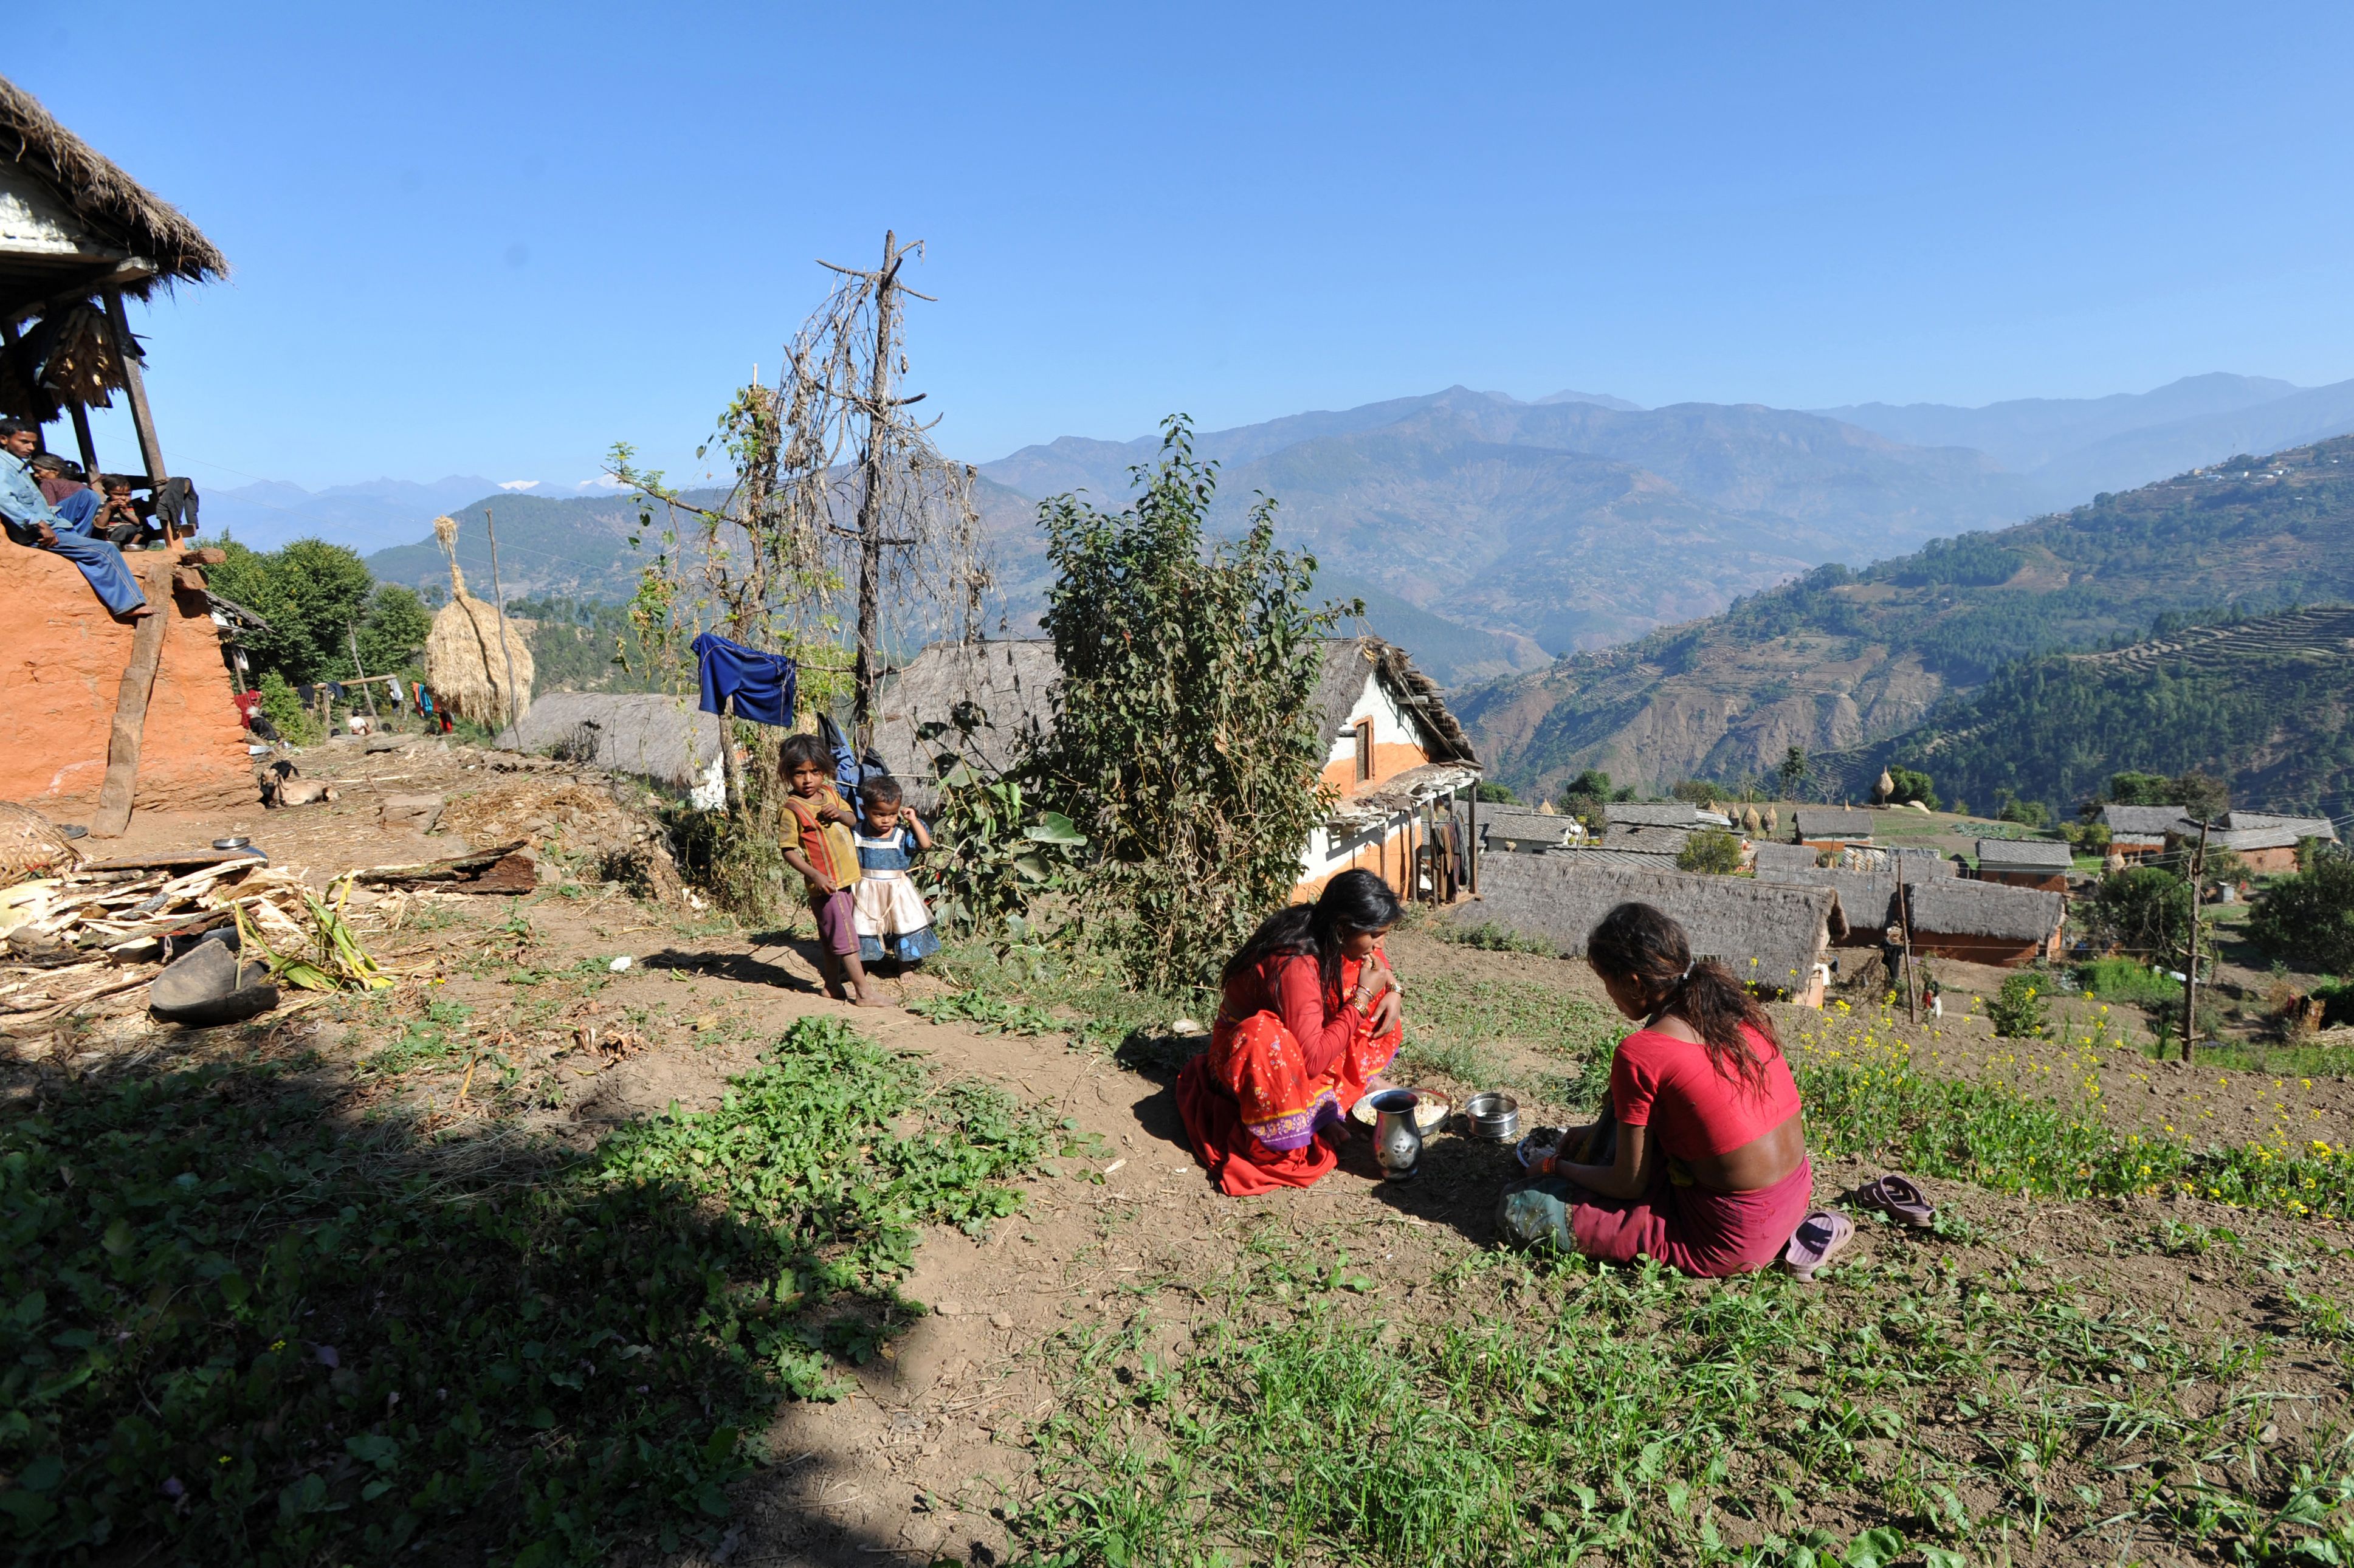 Nepal: 15-year-old girl dies in 'menstruation hut' | CNN